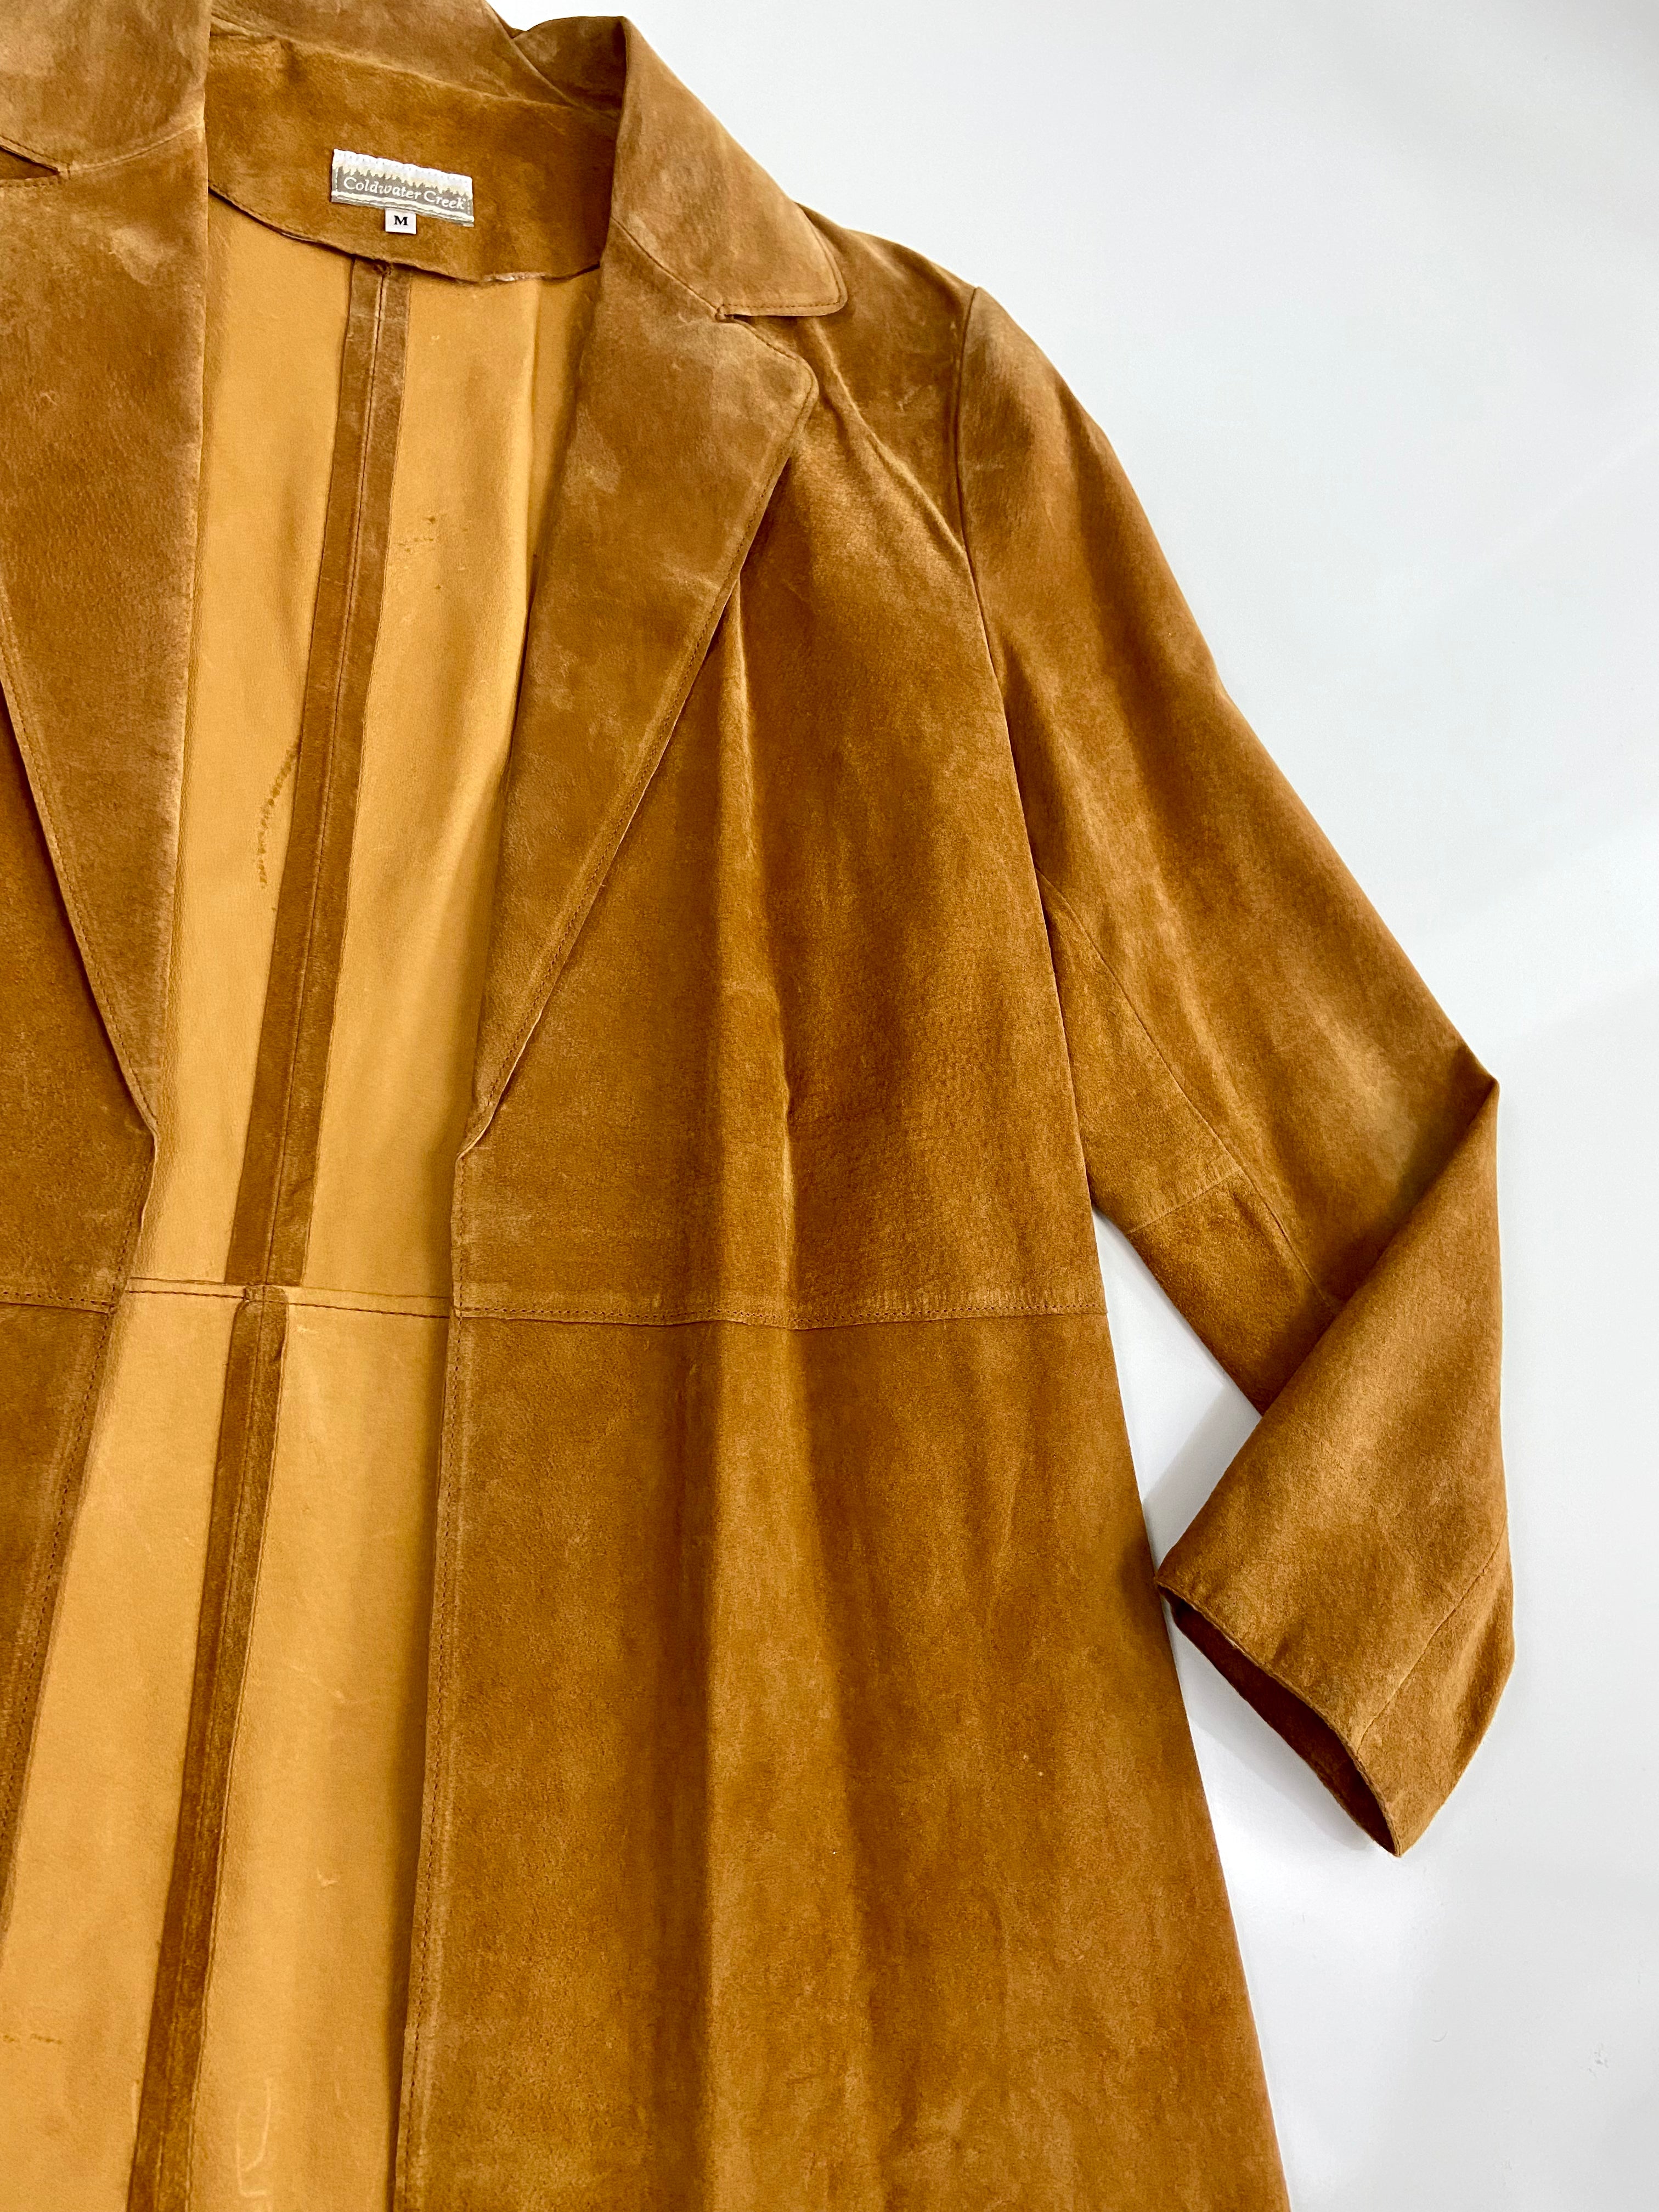 Terracotta leather jacket